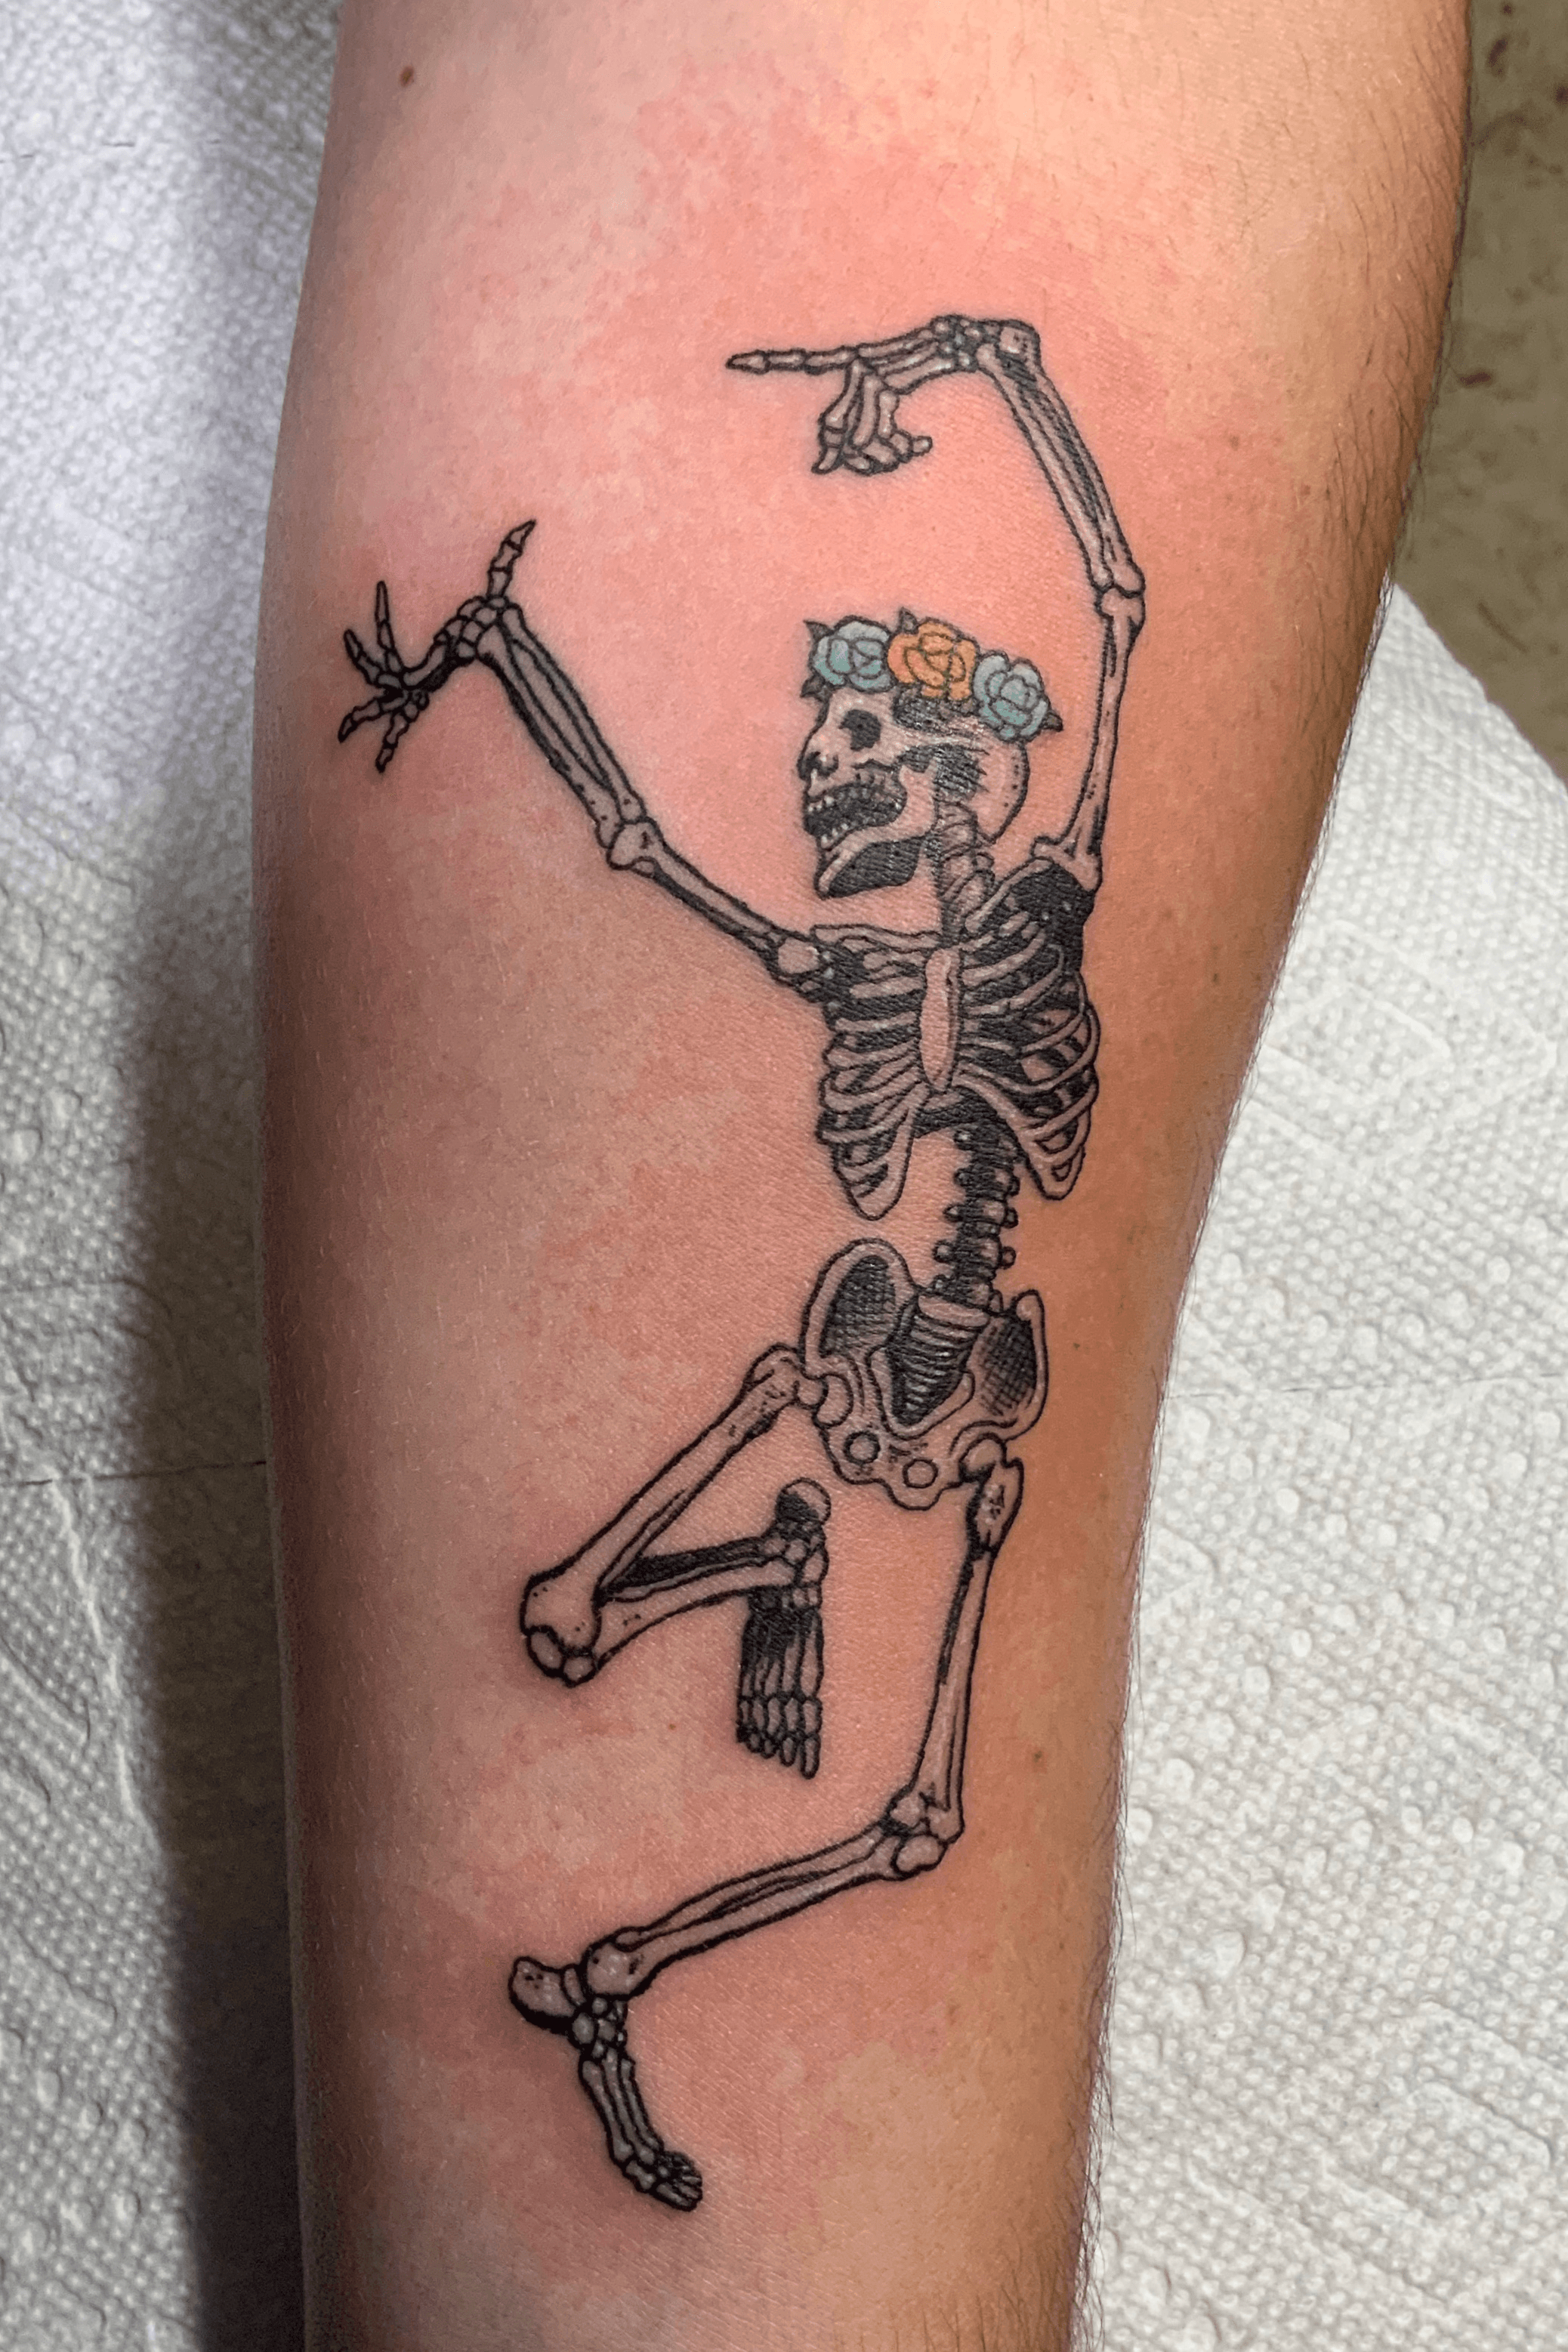 Dancer Tattoo  skeletons dancing  Dancer tattoo Skeleton tattoos Cool  tattoos